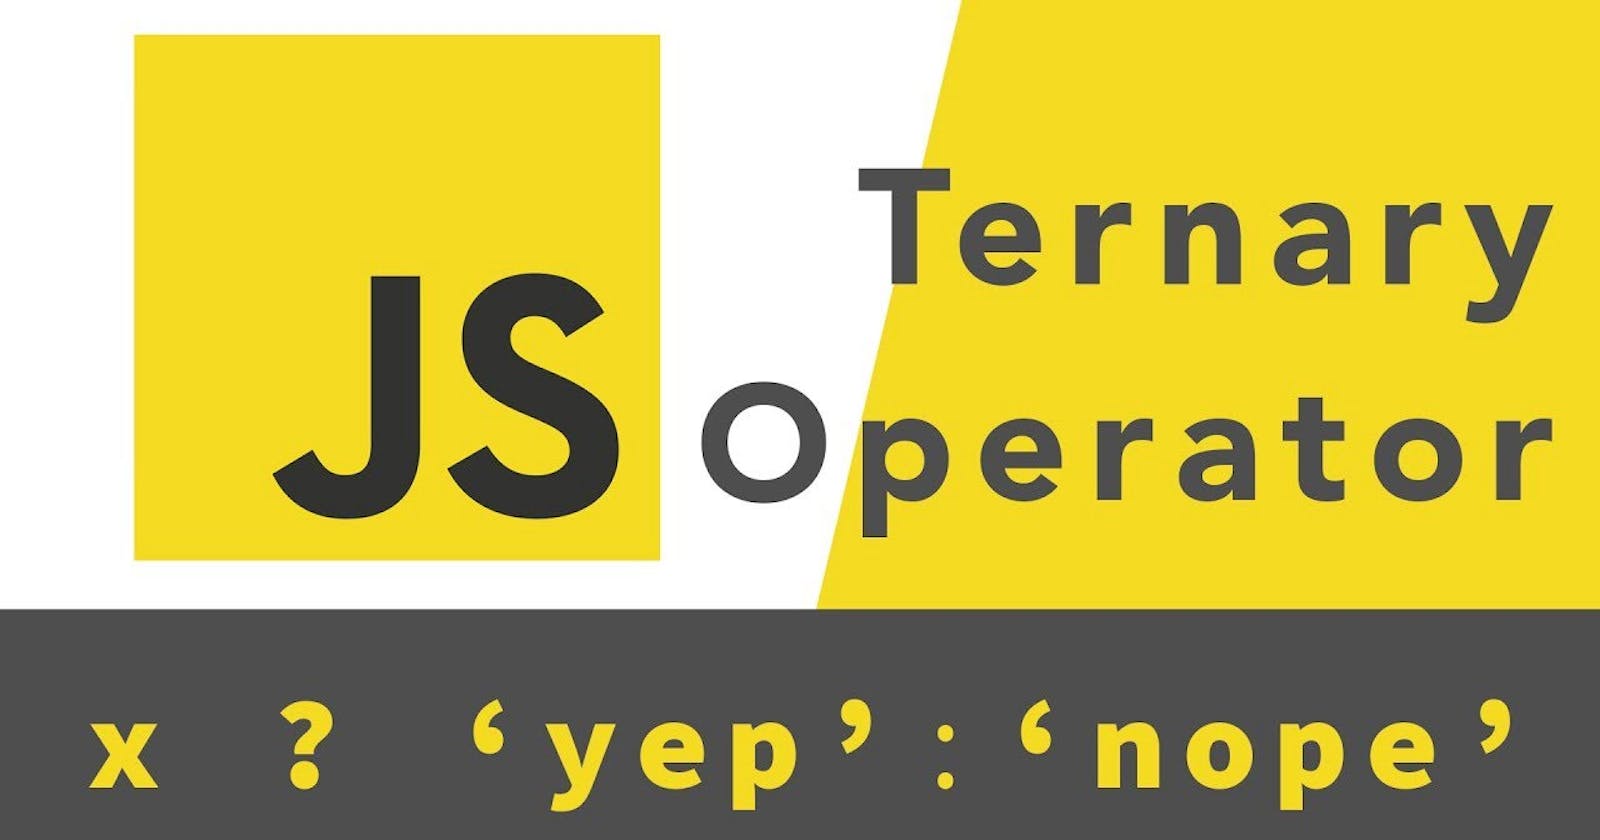 Ternary Operator in Javascript